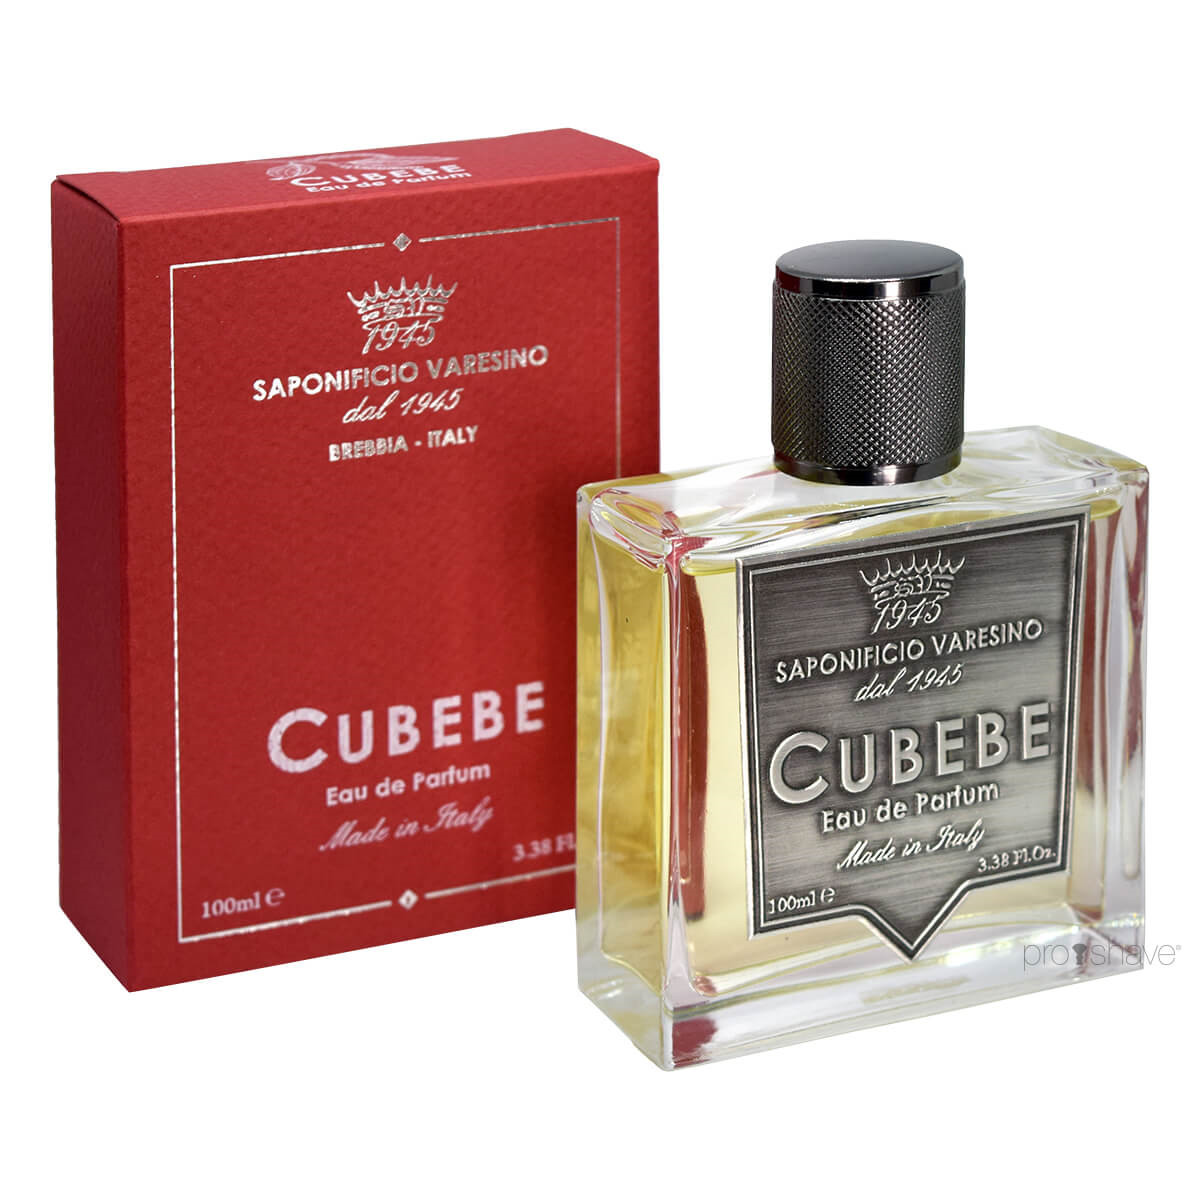 Se Saponificio Varesino Eau de Parfum, Cubebe, 100 ml. hos Proshave